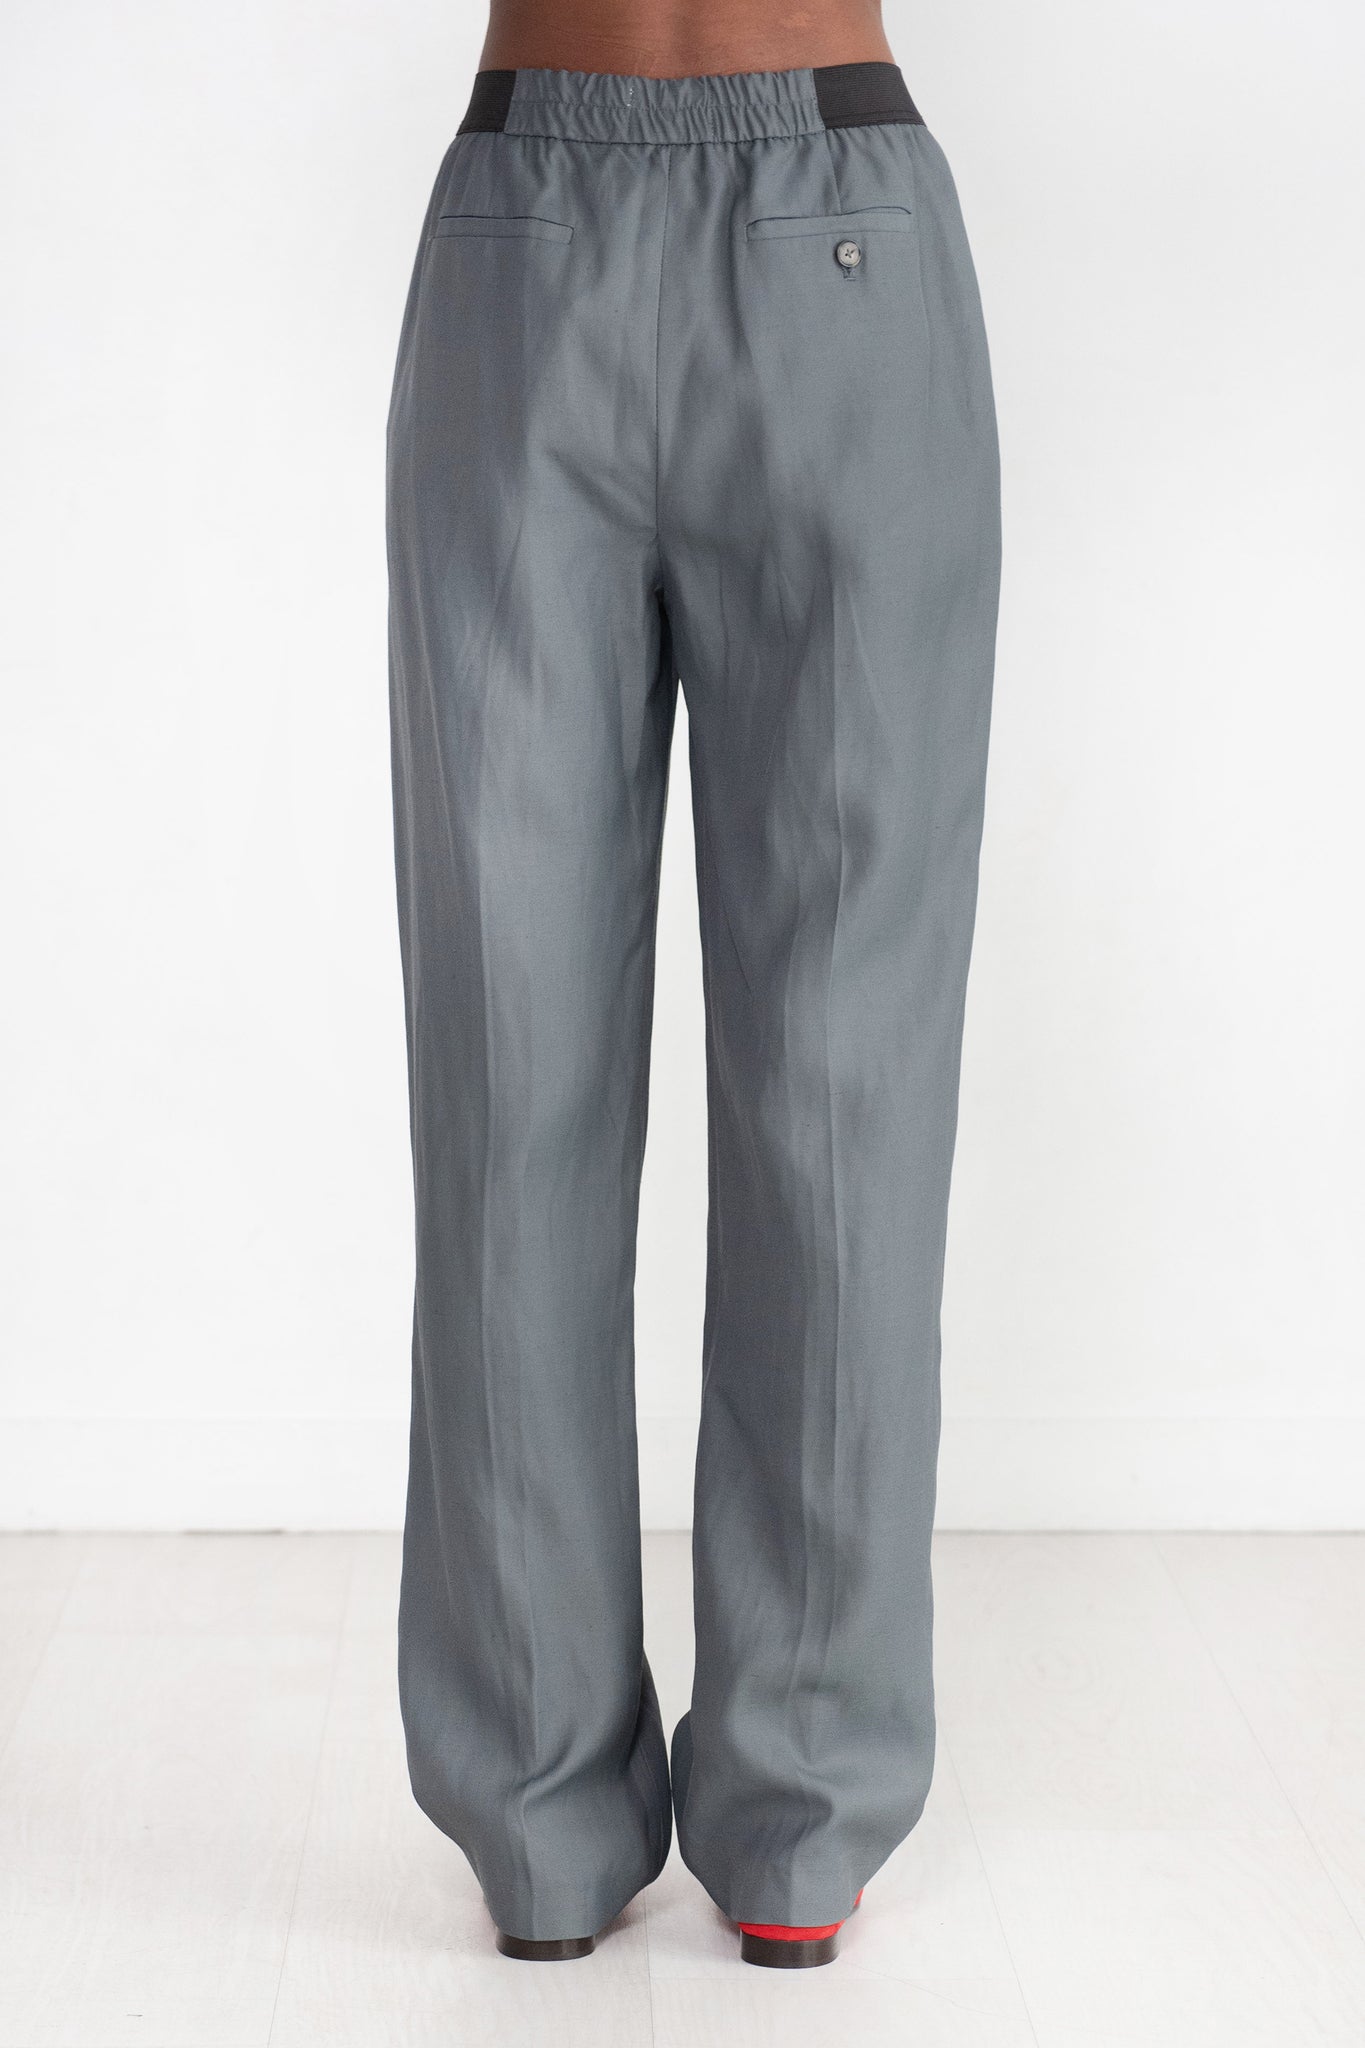 Takaroa Elastic Pants, Ford Grey